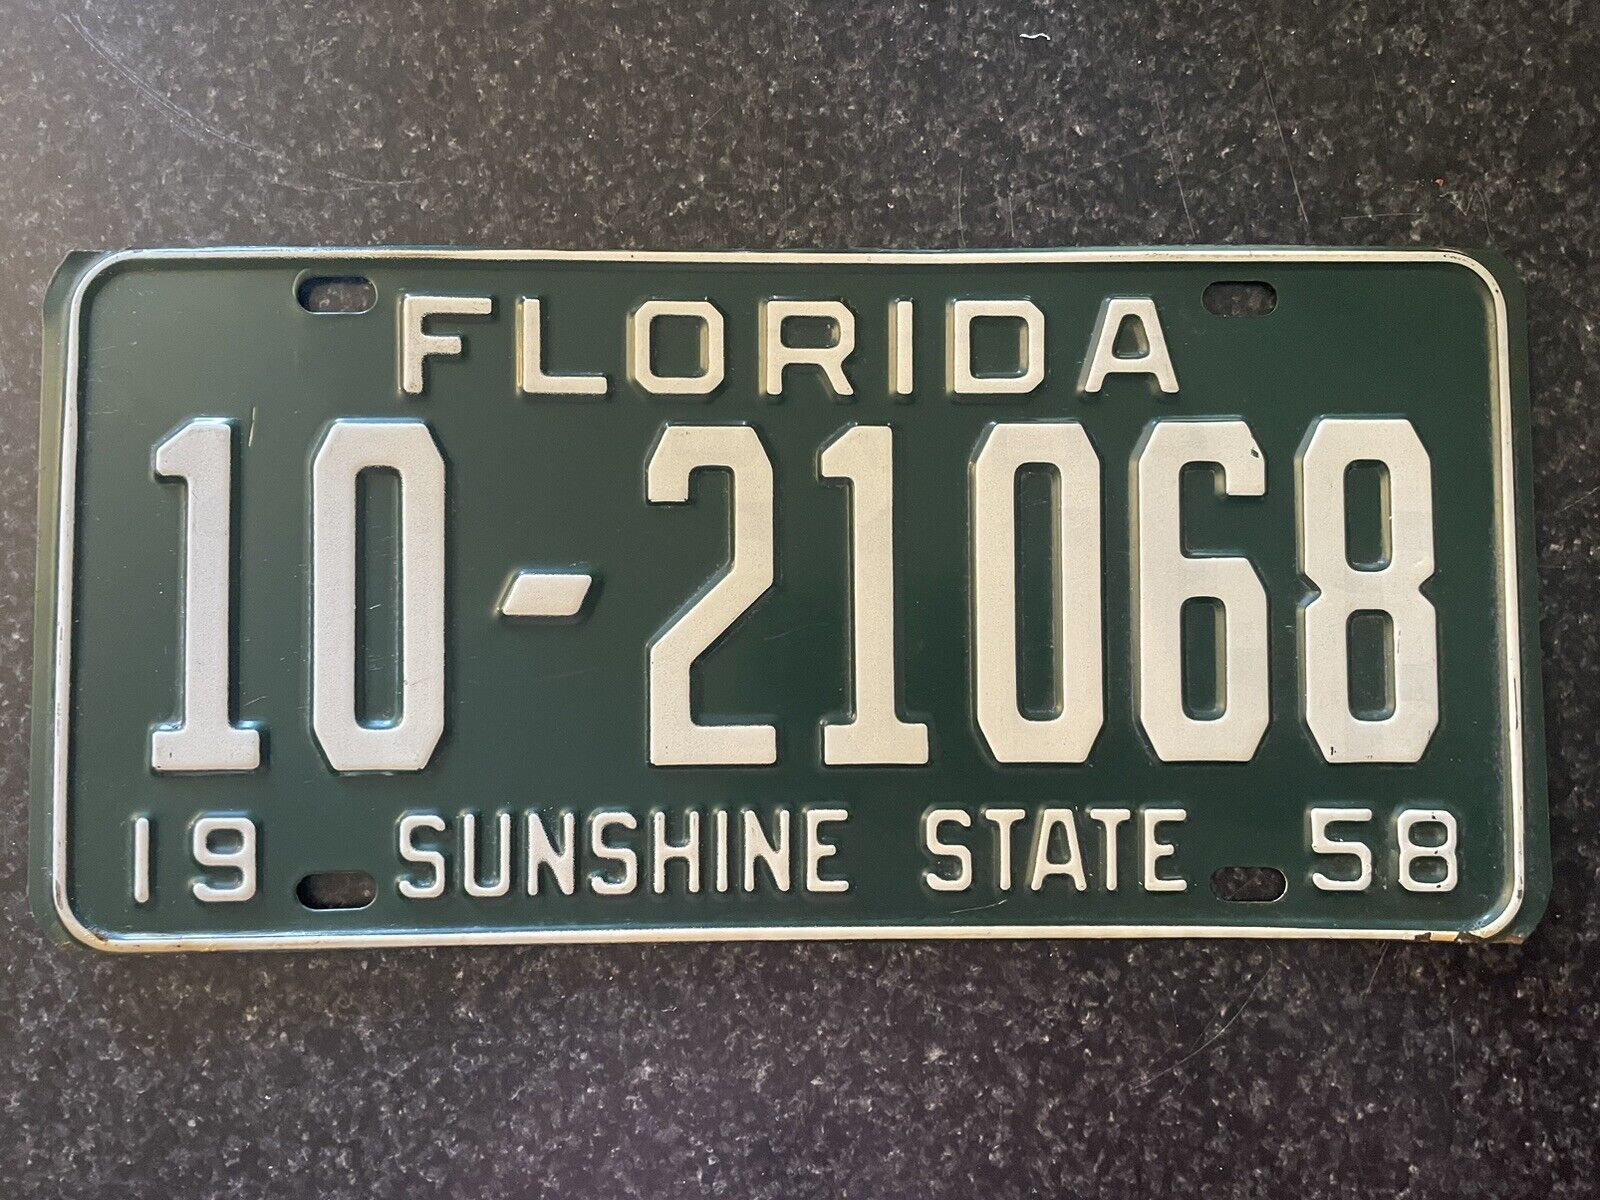 LICENSE PLATE FLORIDA 1958 SUNSHINE STATE 10-21068